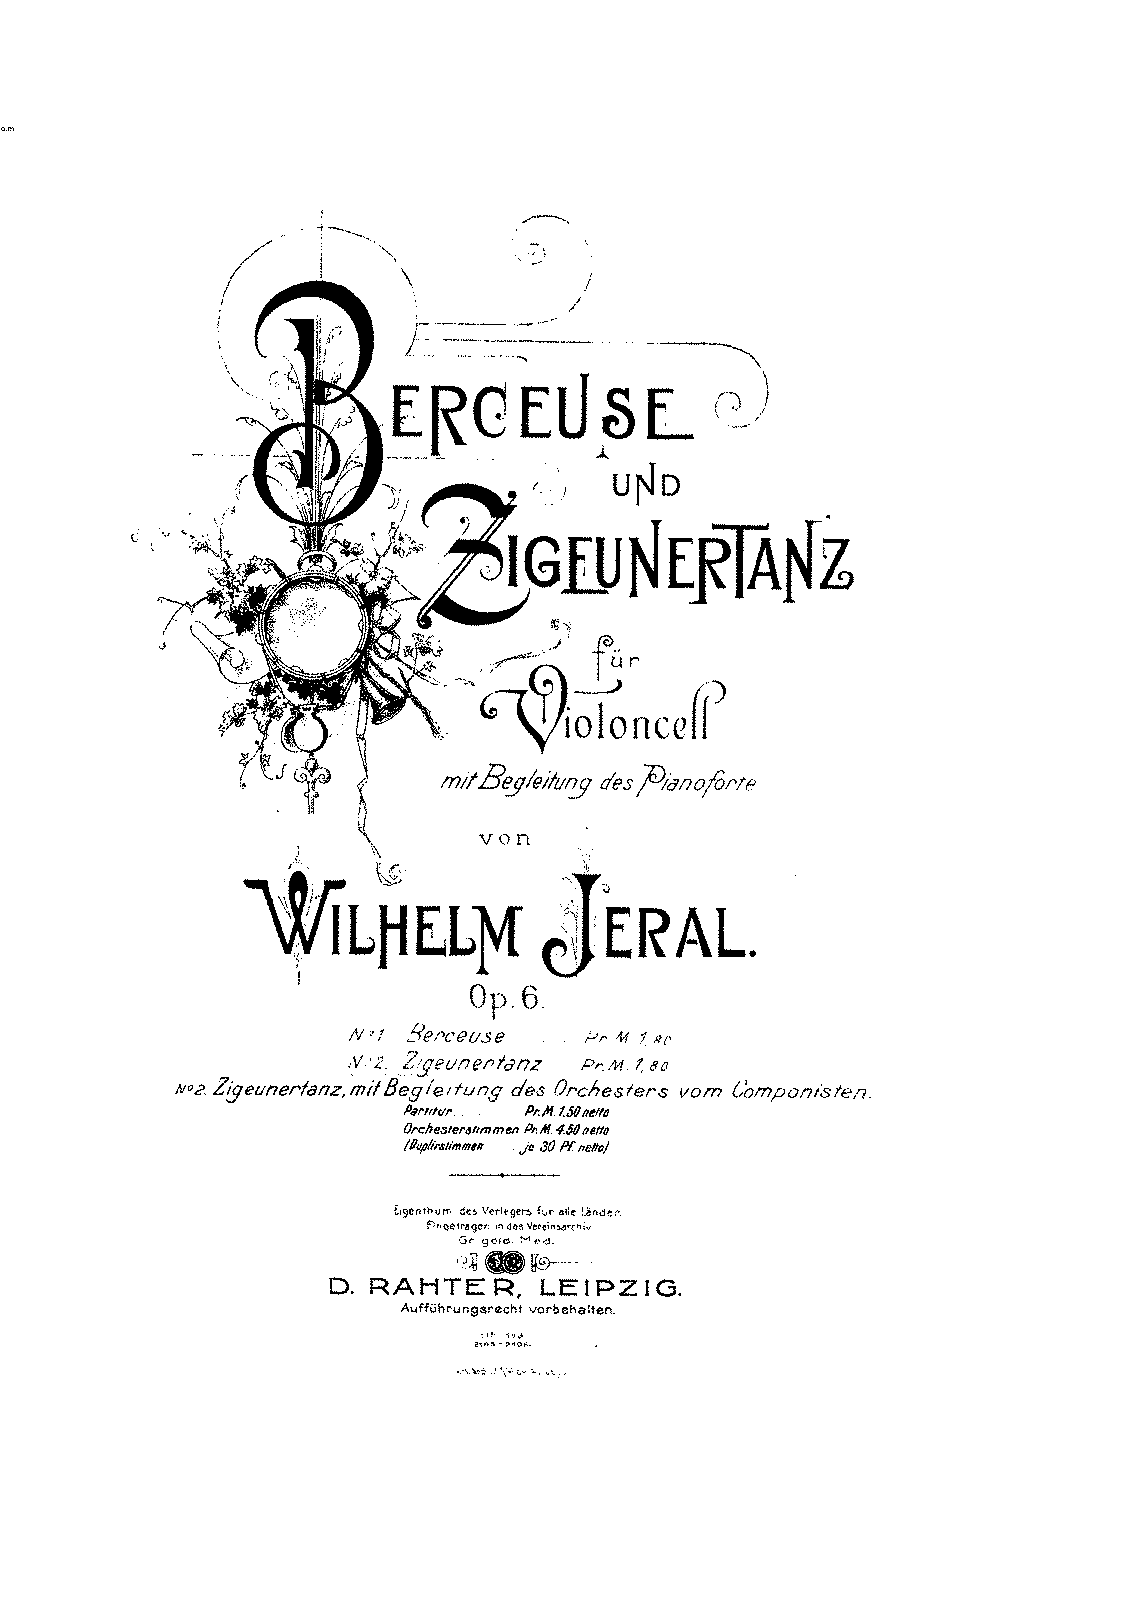 Berceuse und Zigeunertanz, Op.6 (Jeral, Wilhelm) - IMSLP